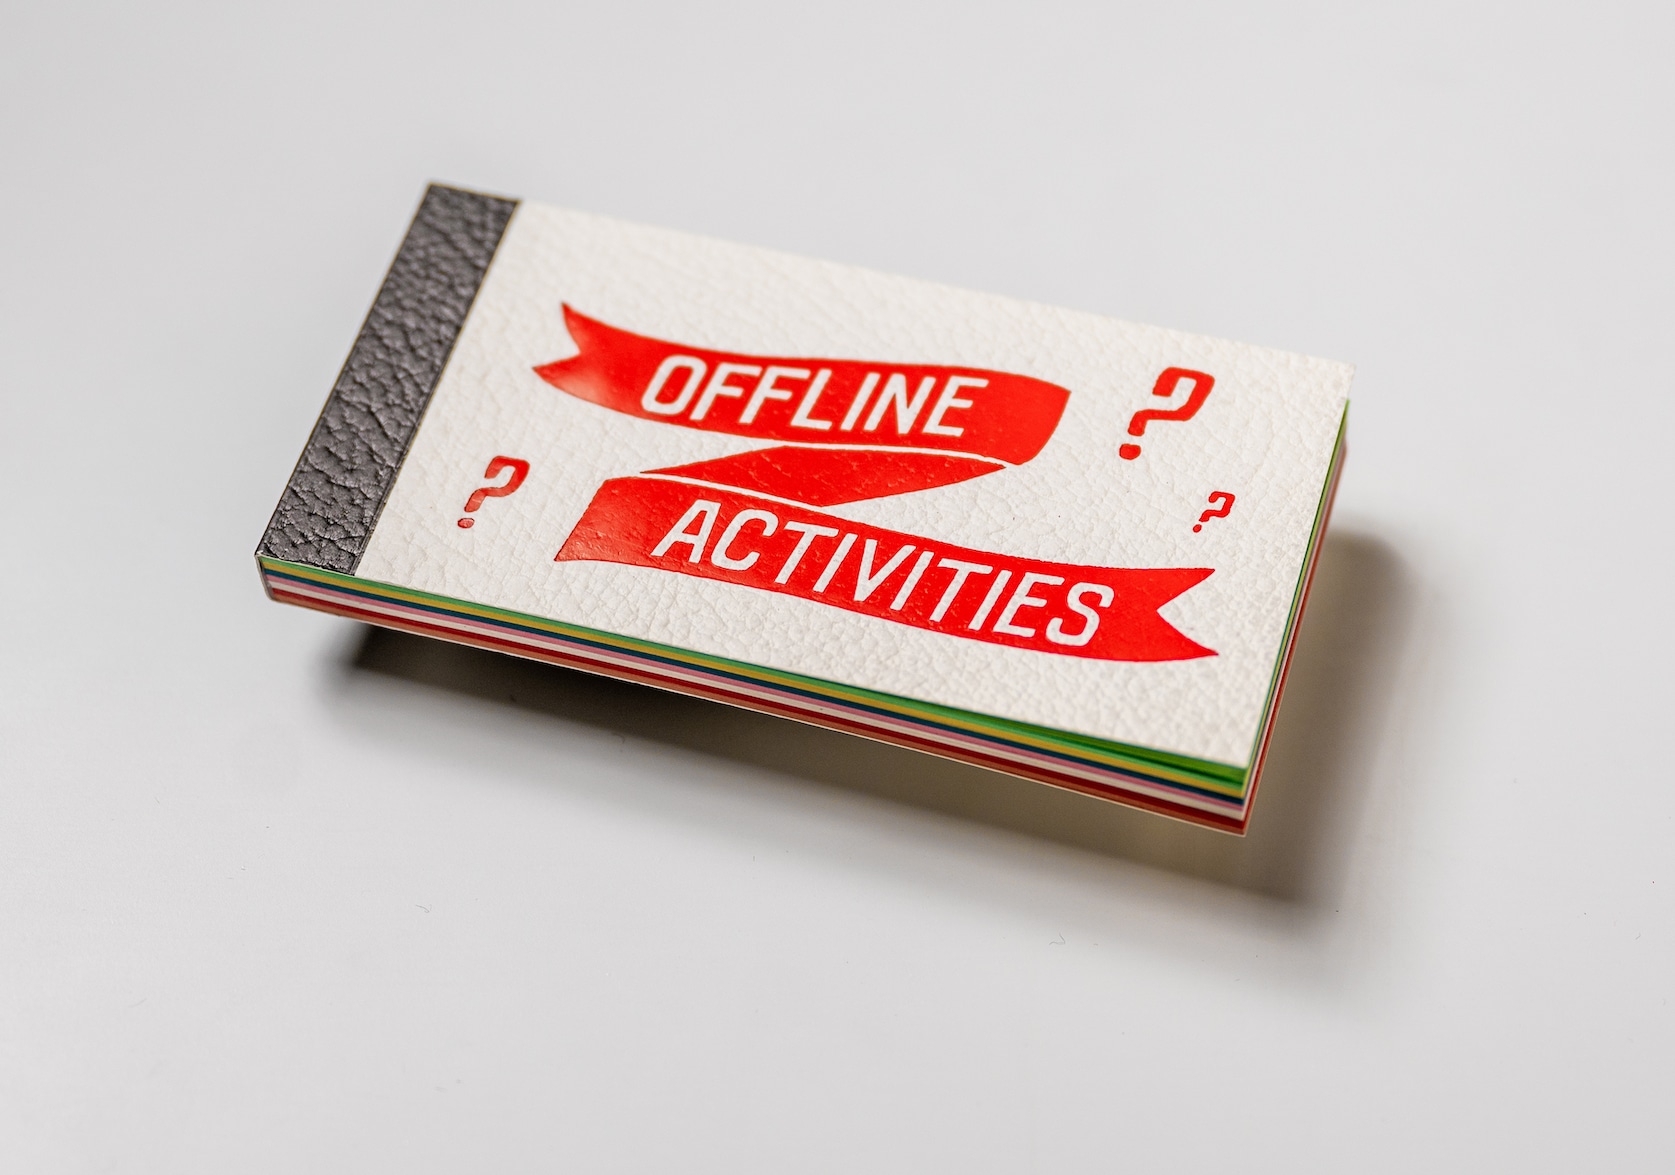 Offline Activities by Tamara Shopsin & Jason Fulford